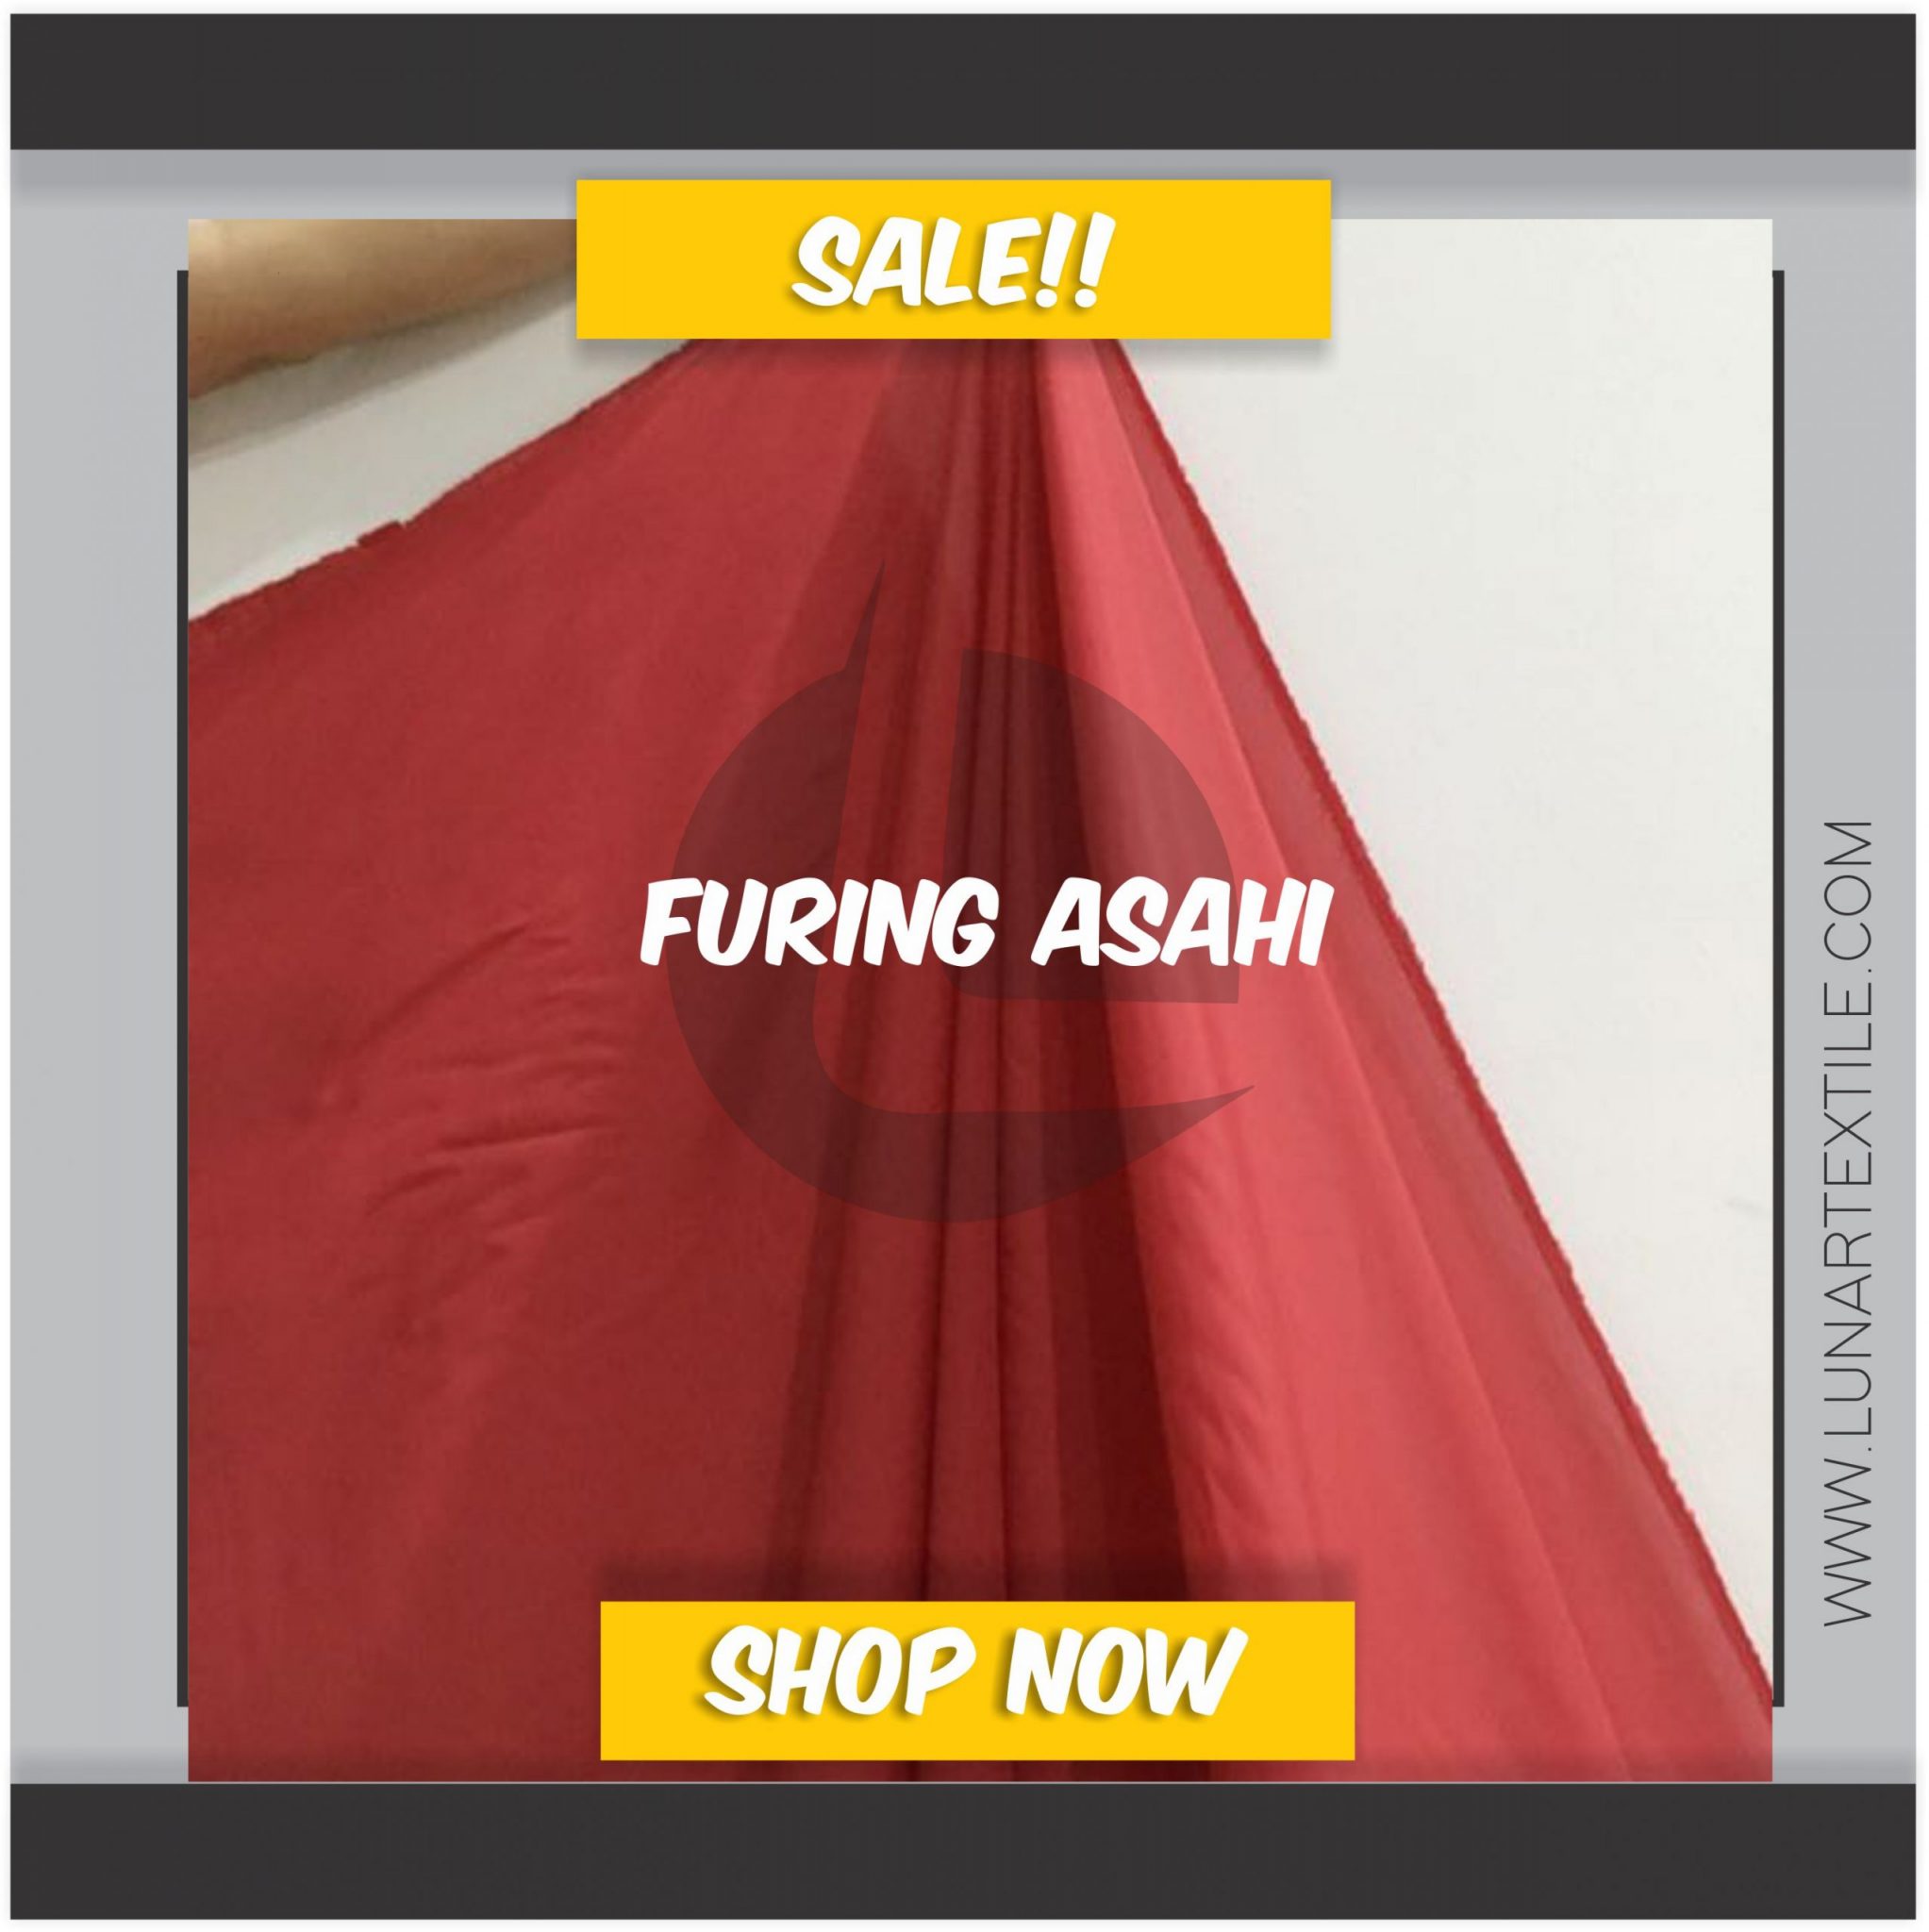 Kain furing asahi sering digunakan sebagai bahan kain lapisan untuk menyerap keringat dan juga sebagai penghangat ditubuh